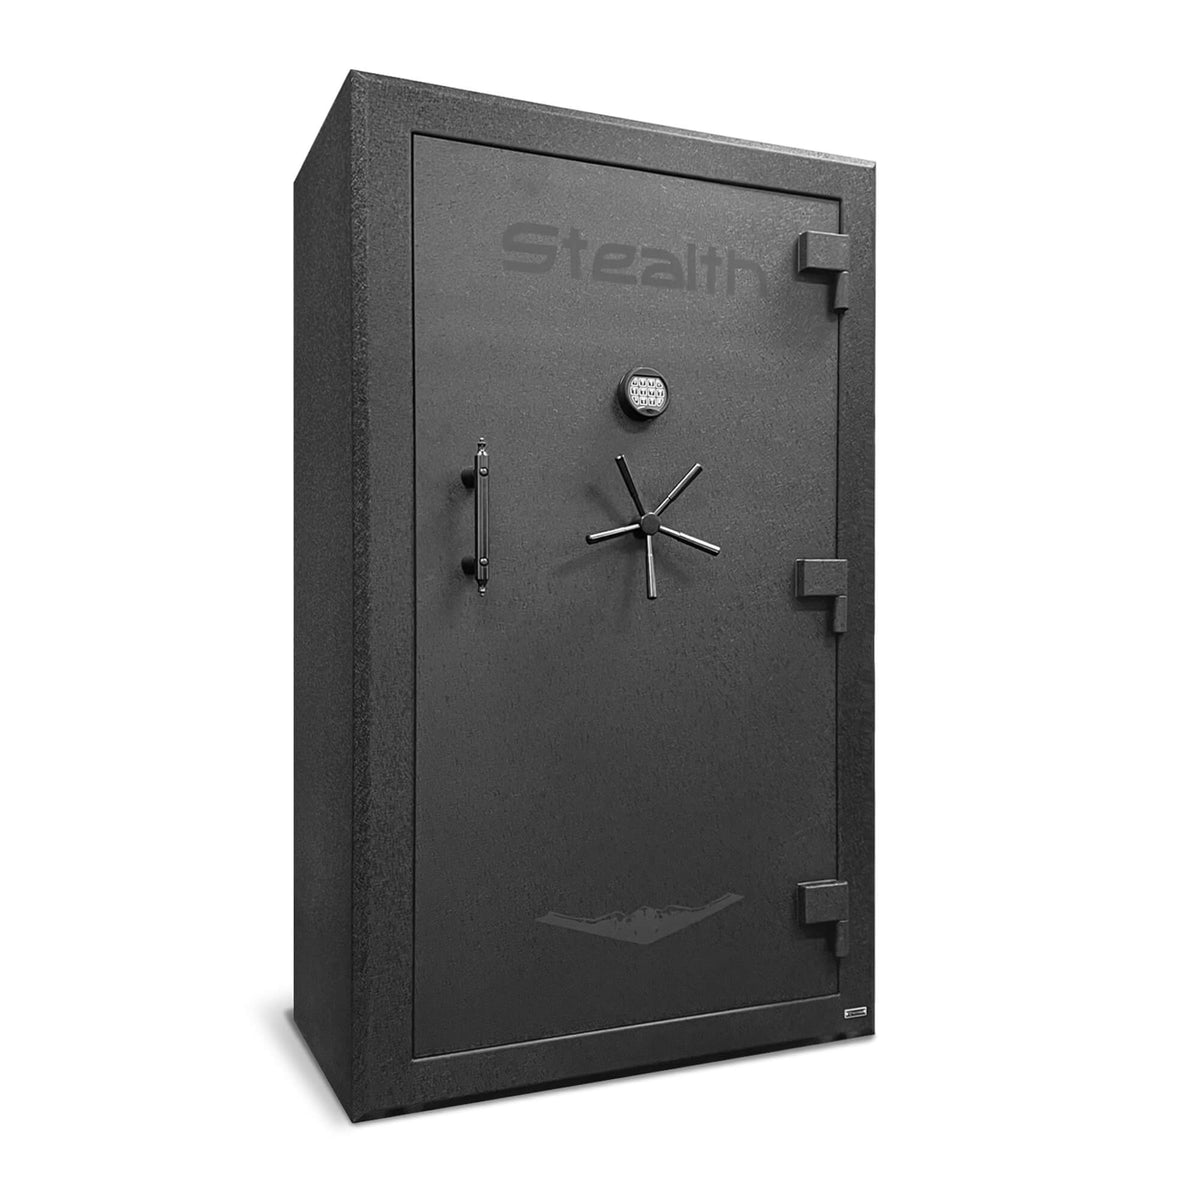 Stealth B1414 Cash Safe Made in USA